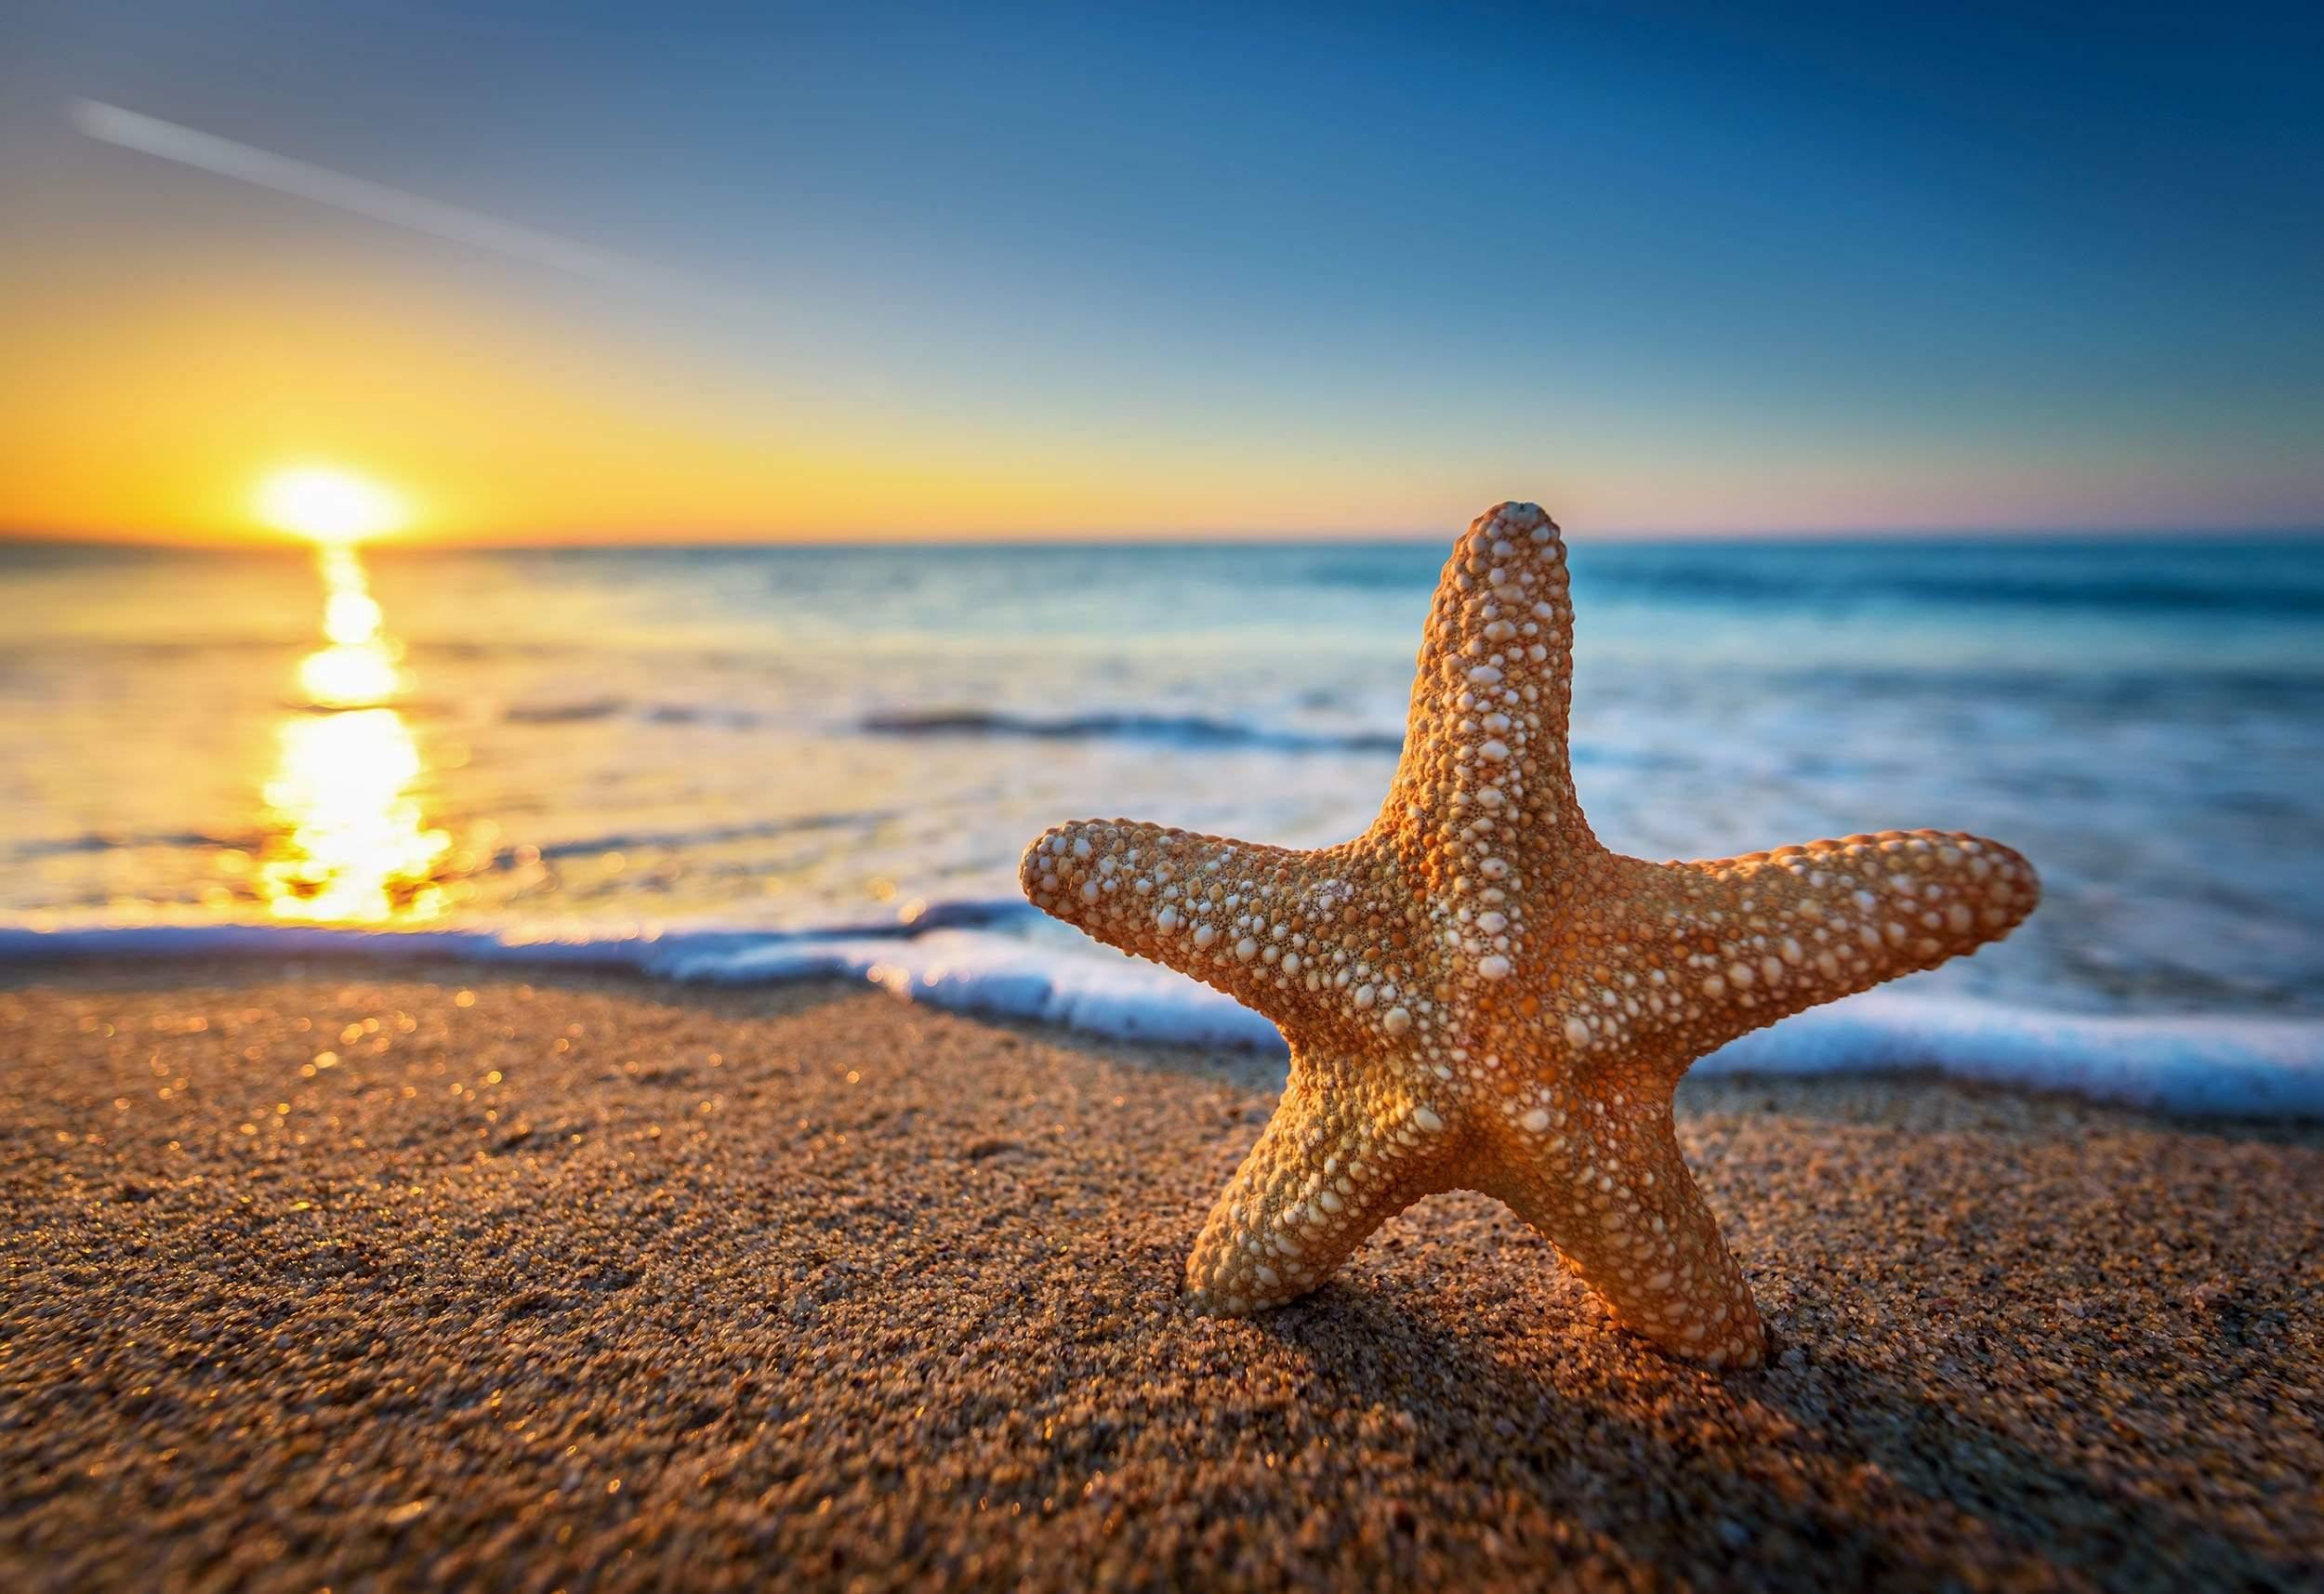 Starfish on beach with sunset